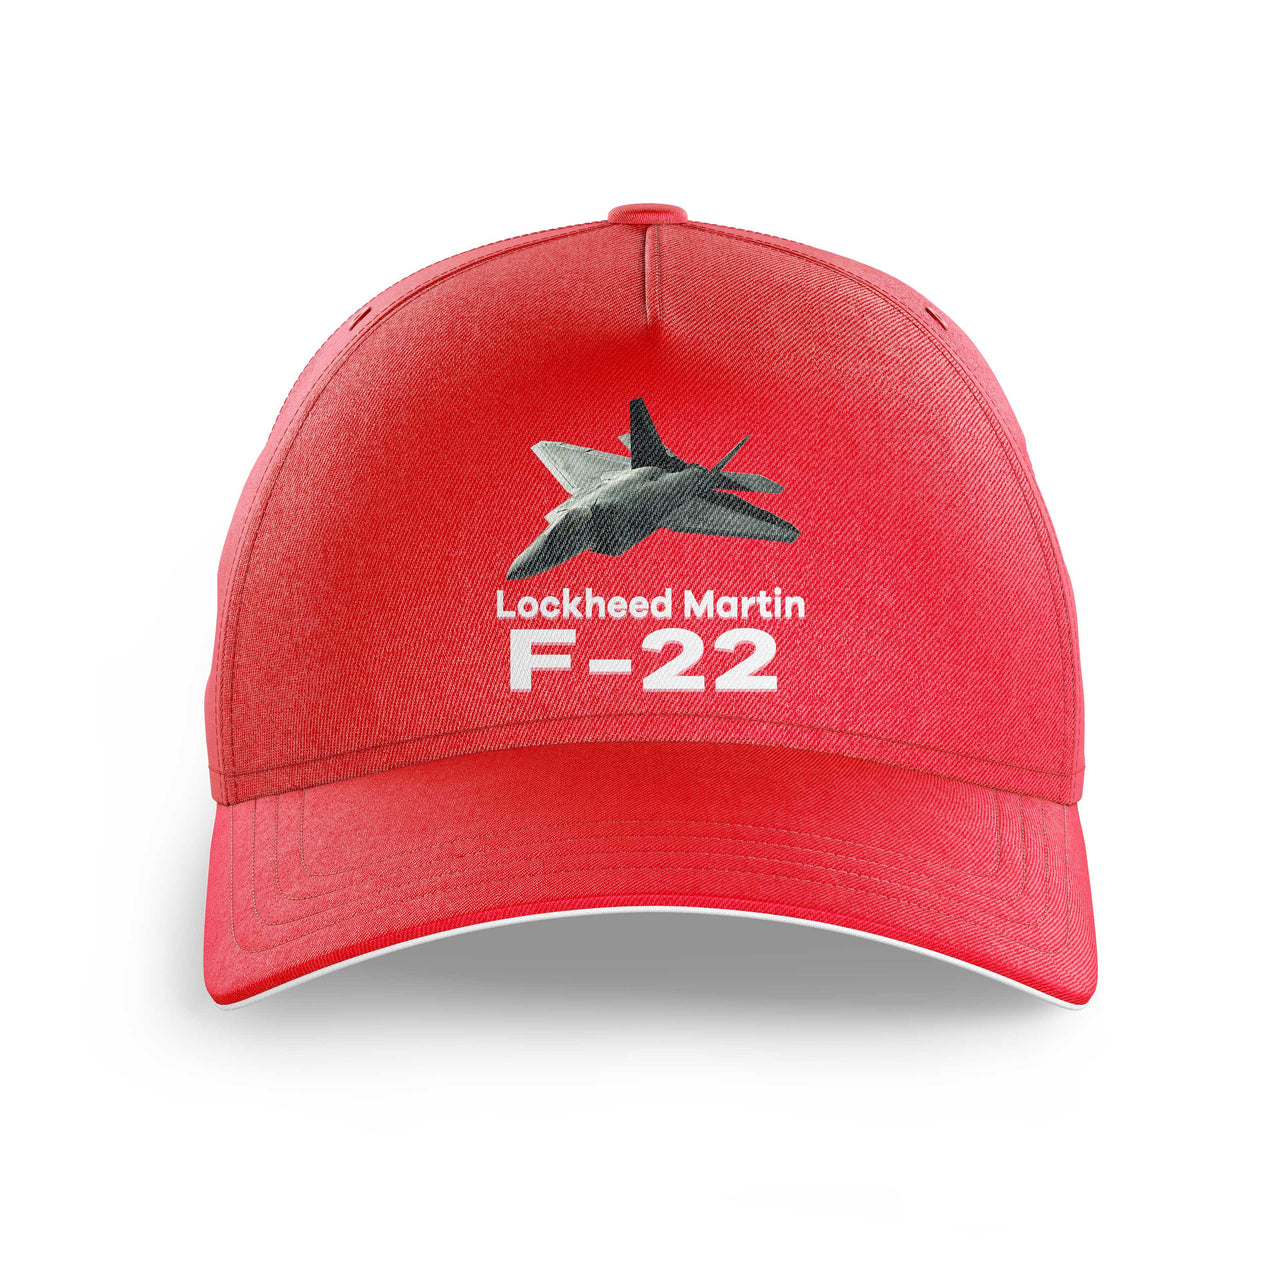 The Lockheed Martin F22 Printed Hats